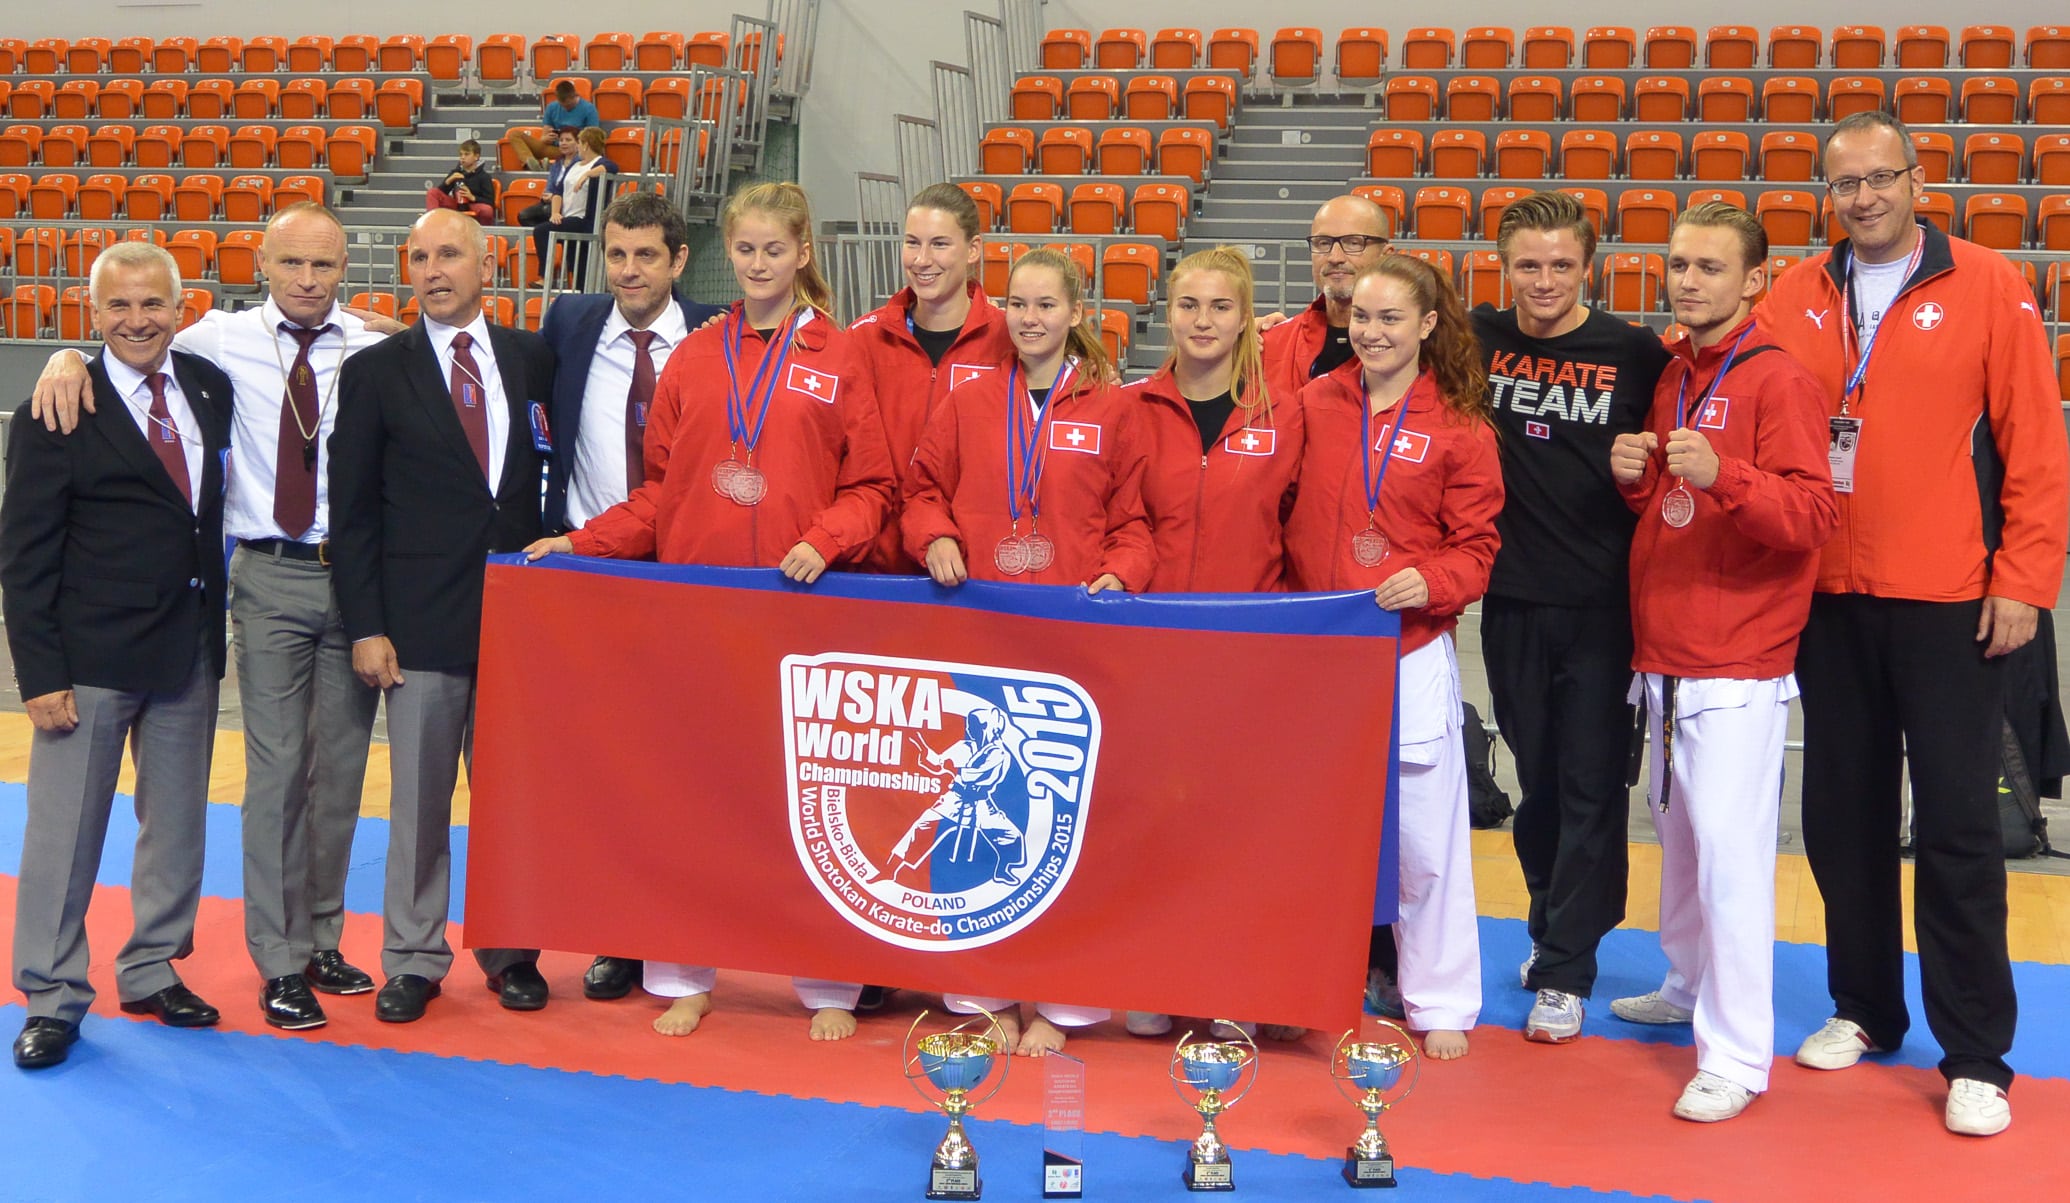 Karatekai Basel - Erfolgreiche SKR-Delegation am WSKA Shotokan Welt-Cup in Polen